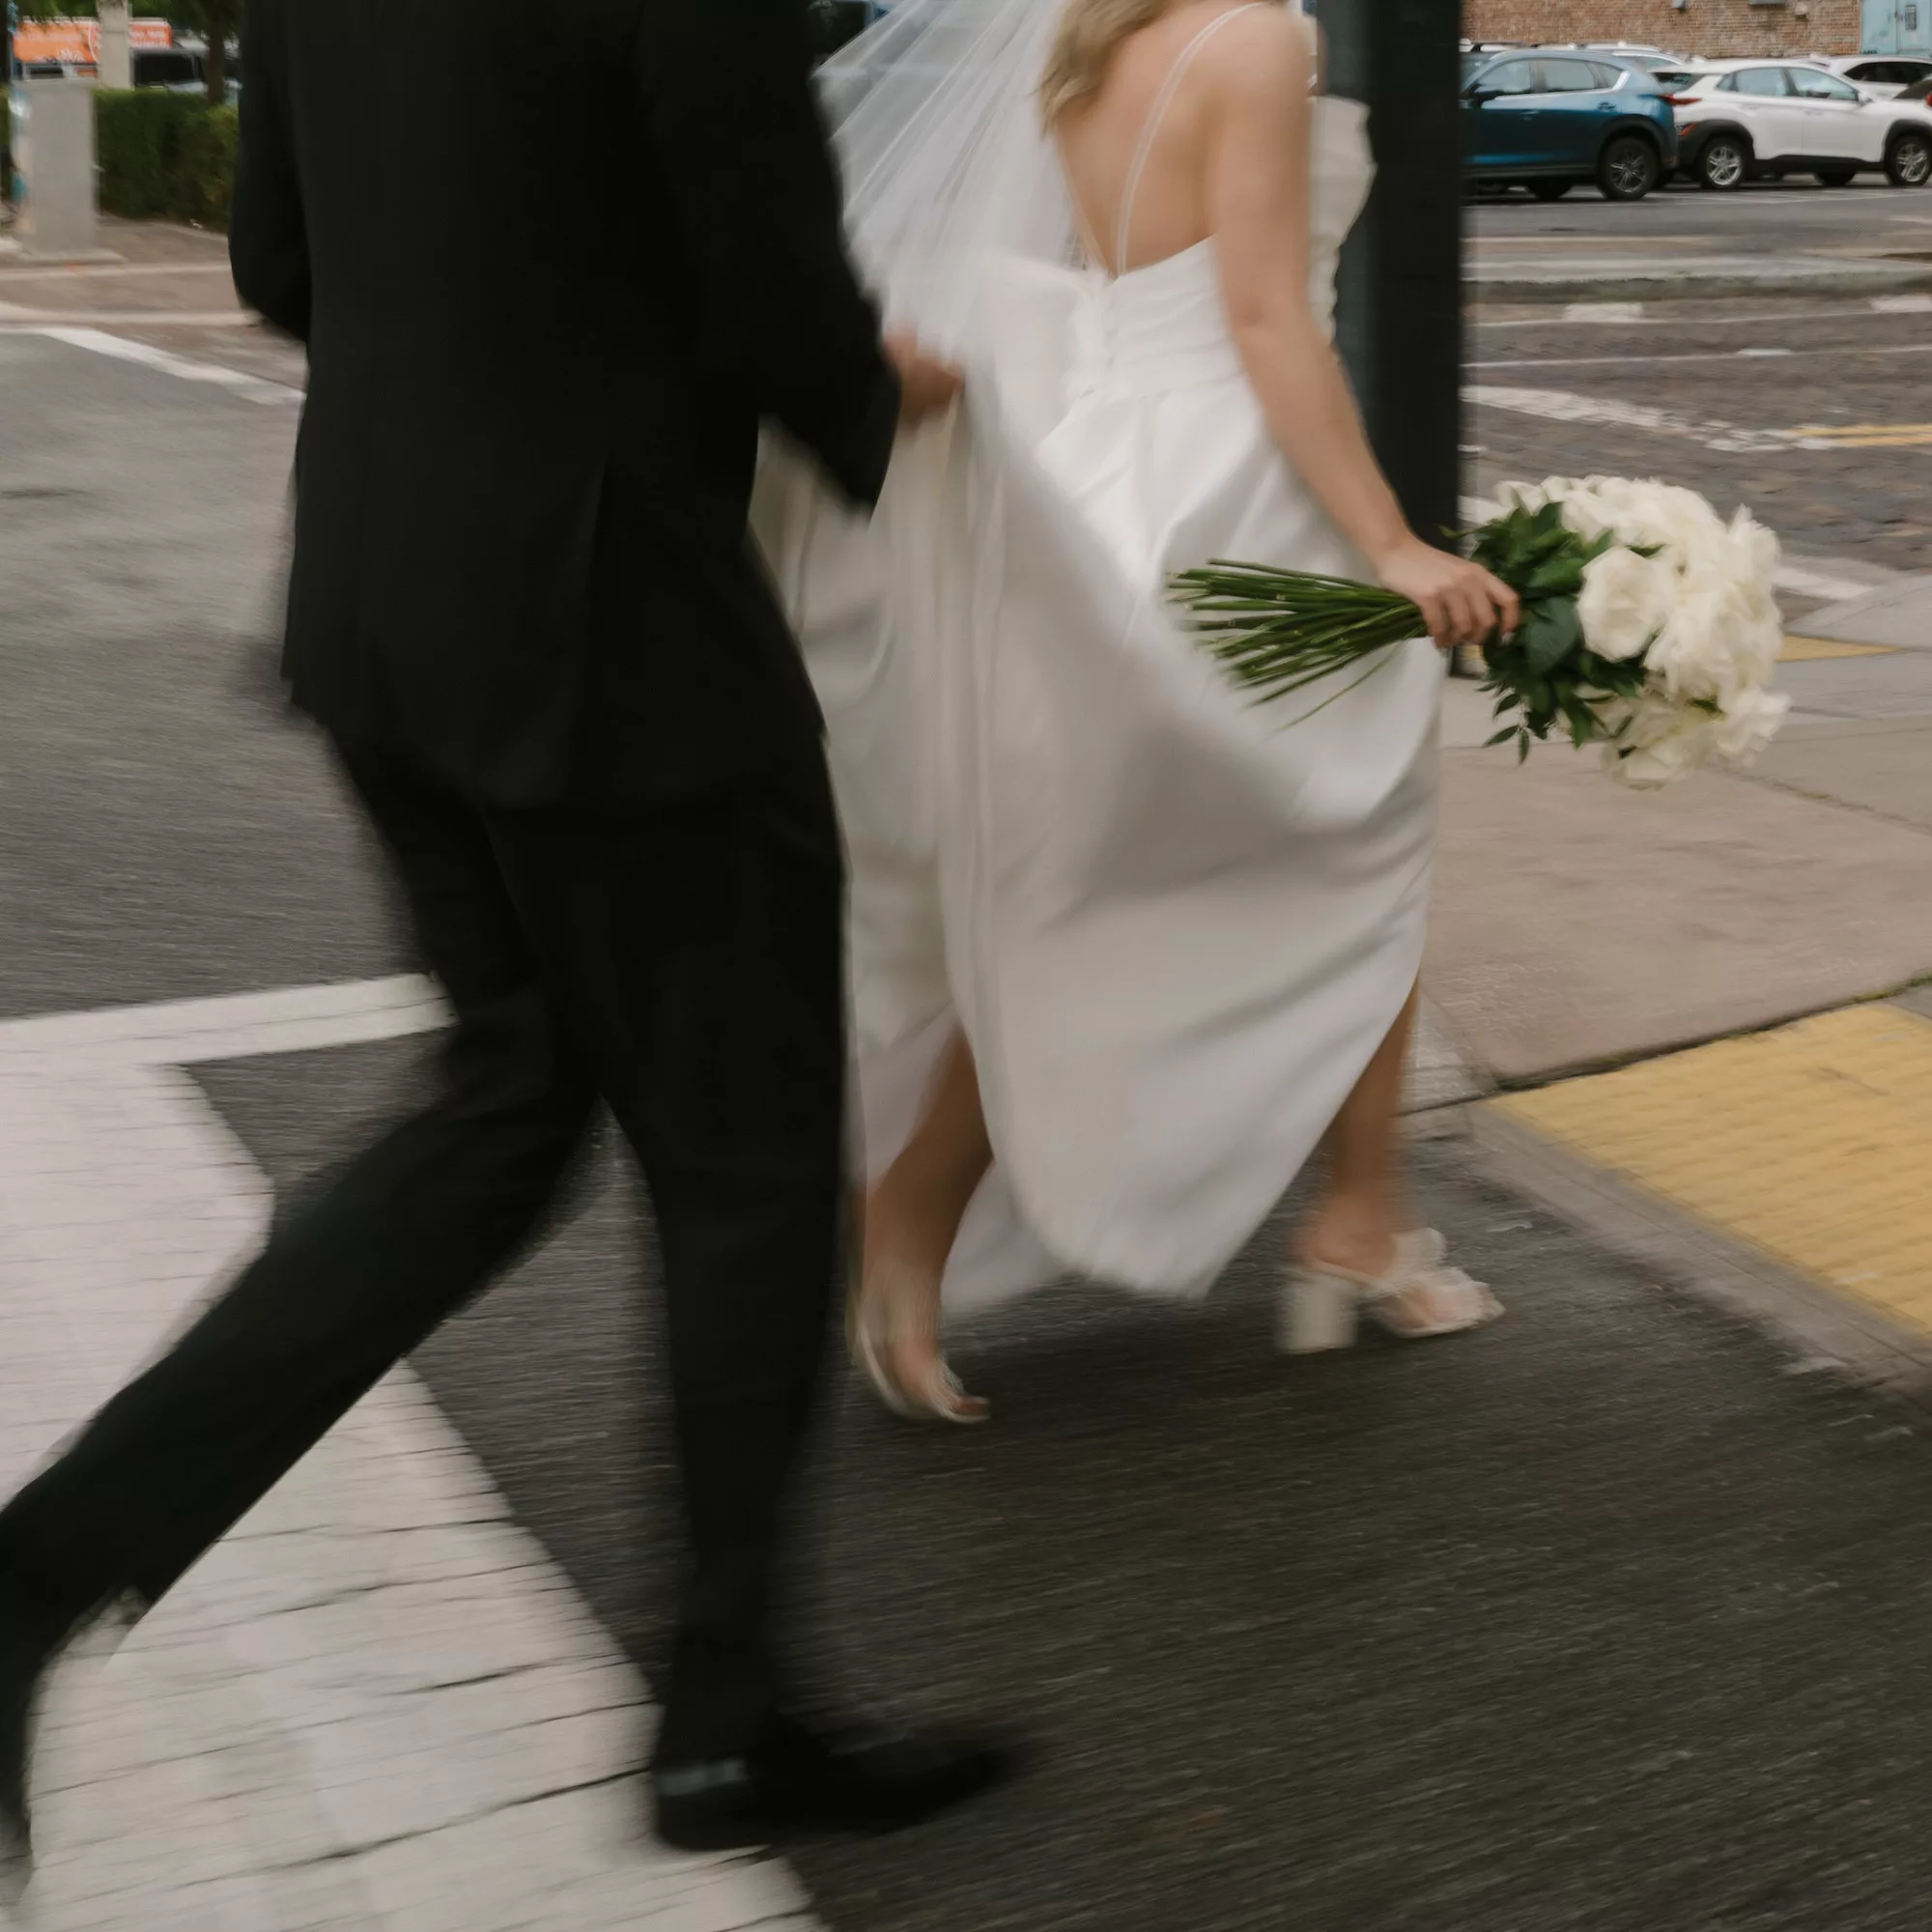 Groom Helping Bride with Wedding Dress Across the Street